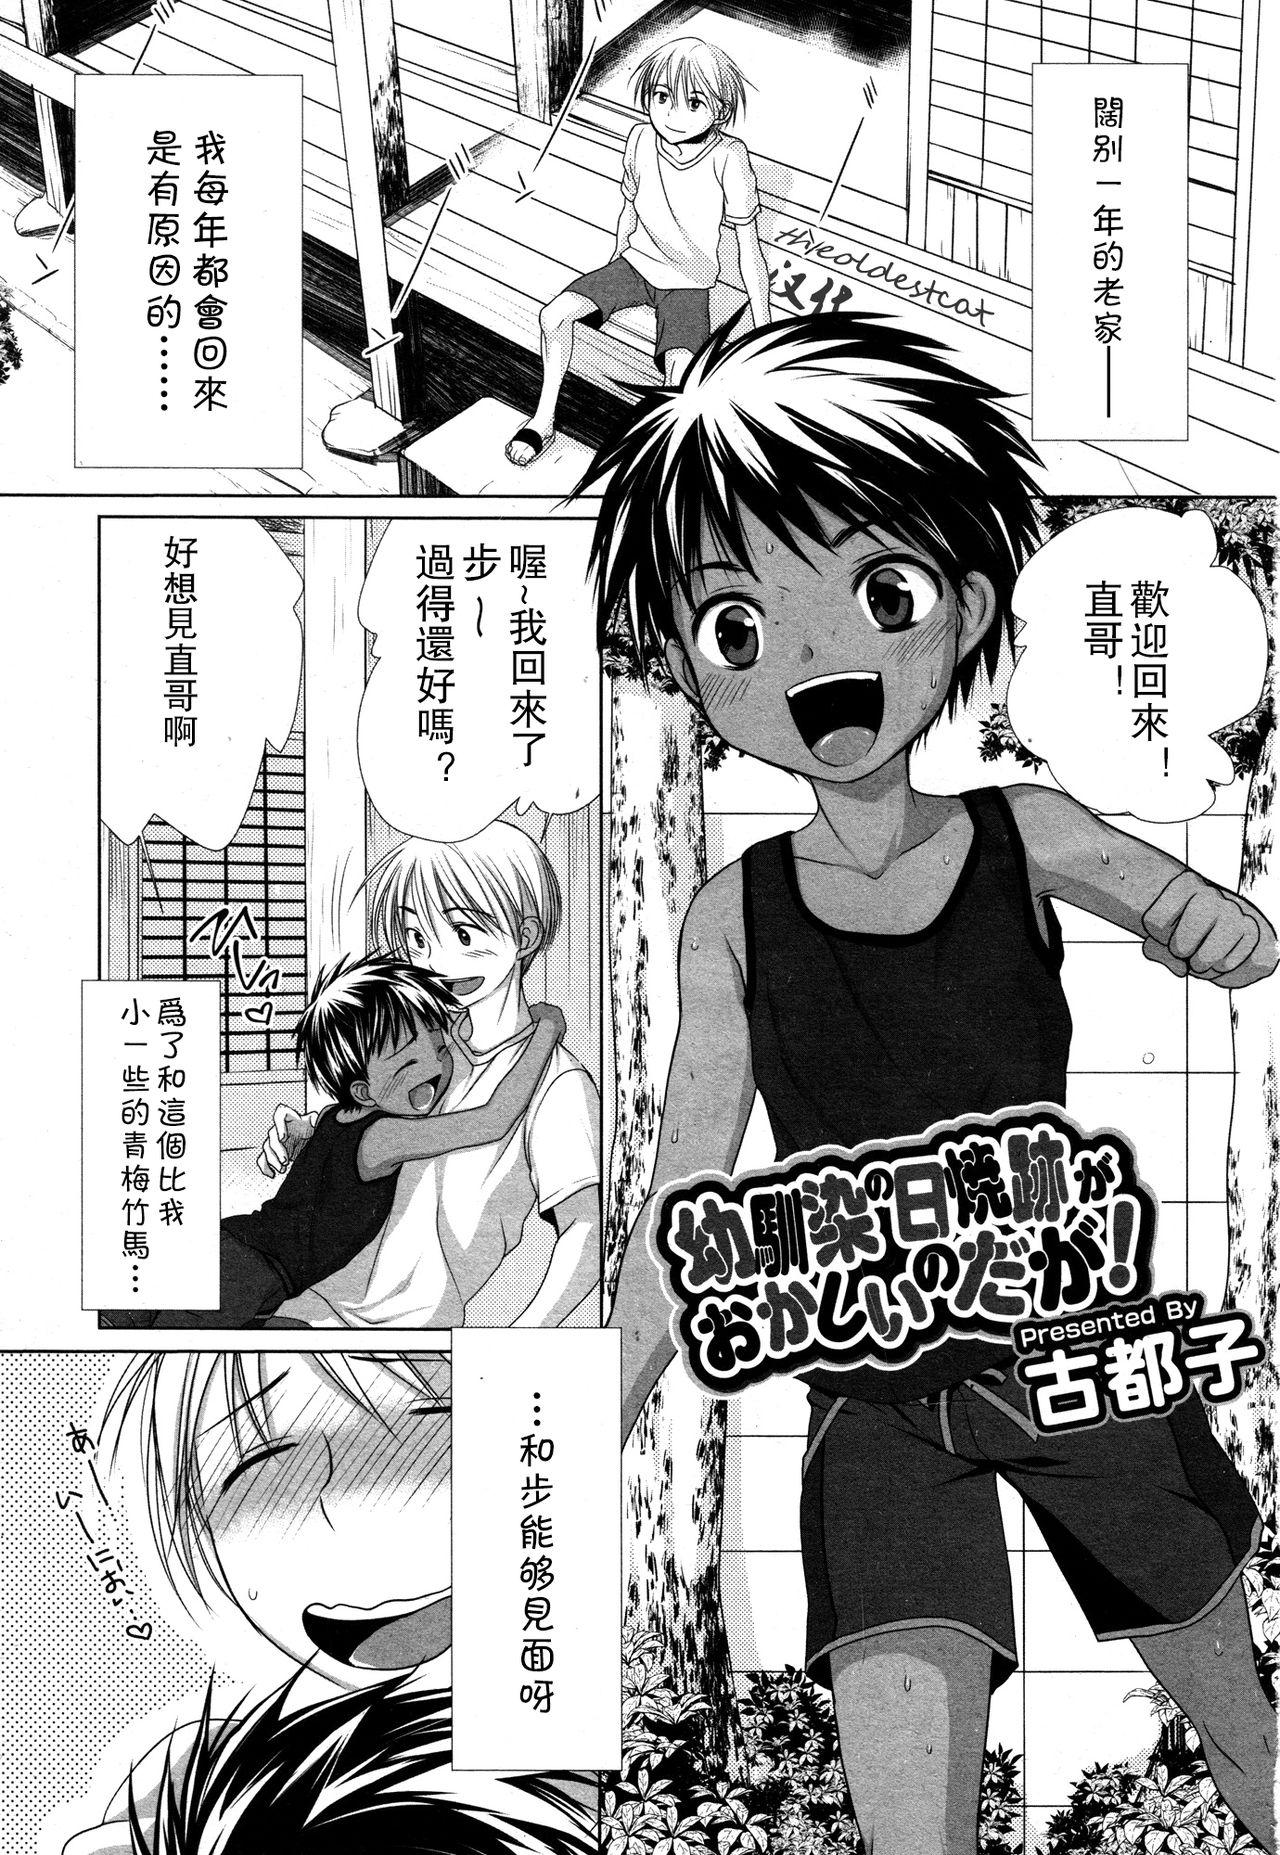 Reverse Cowgirl Osananajimi no Hiyakeato ga Okashii nodaga! Tats - Page 1